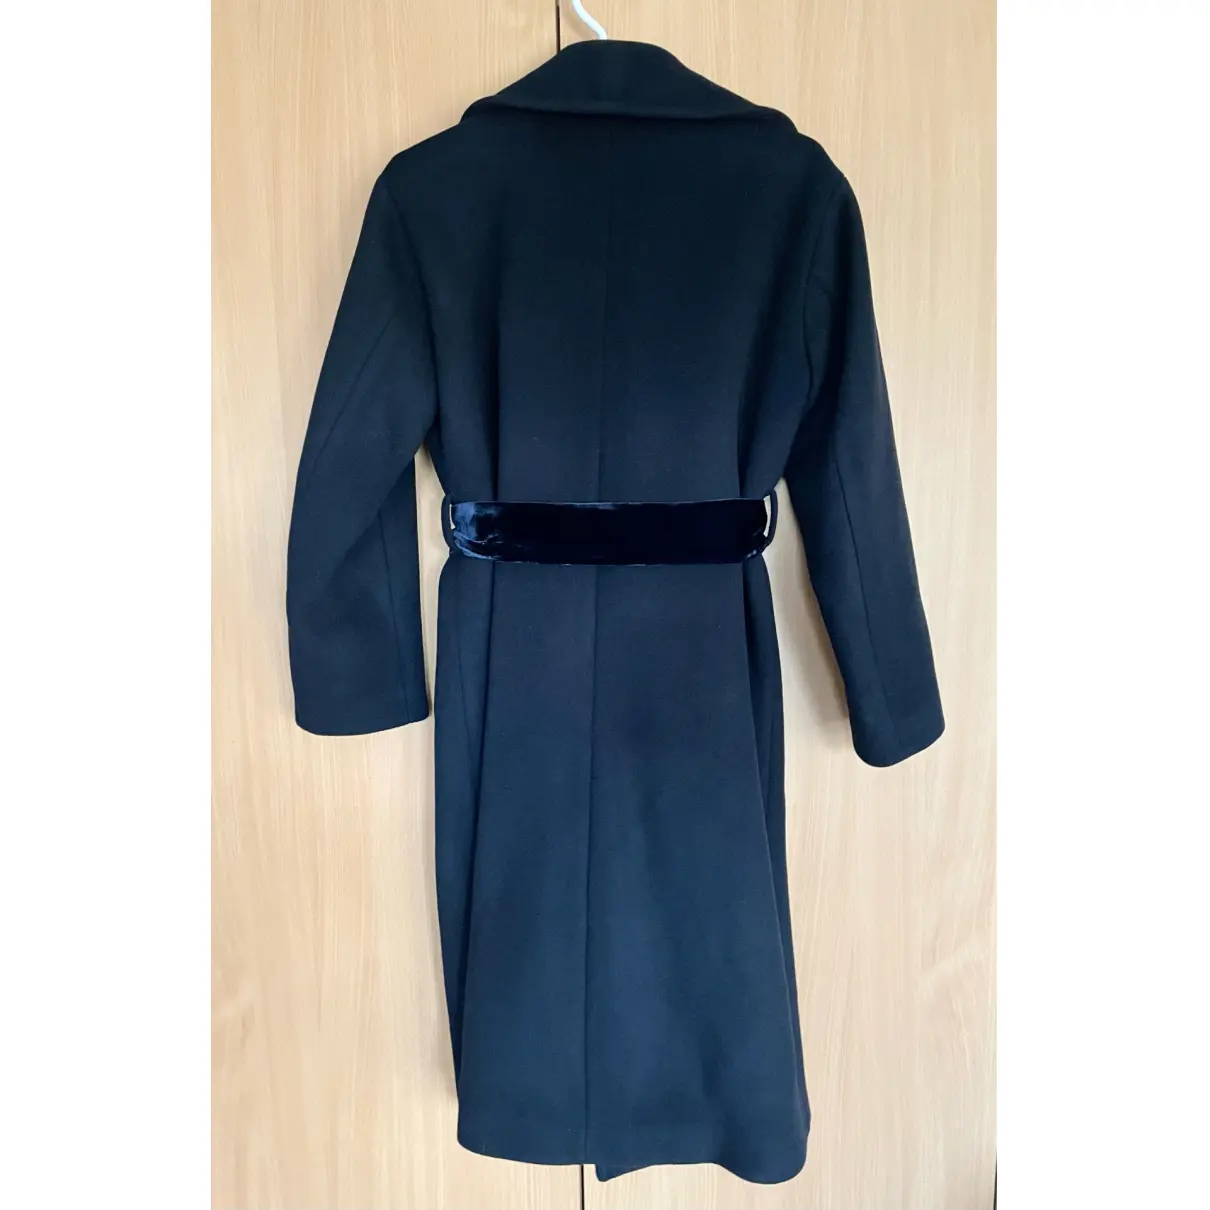 Buy Sandro Fall Winter 2019 wool coat online